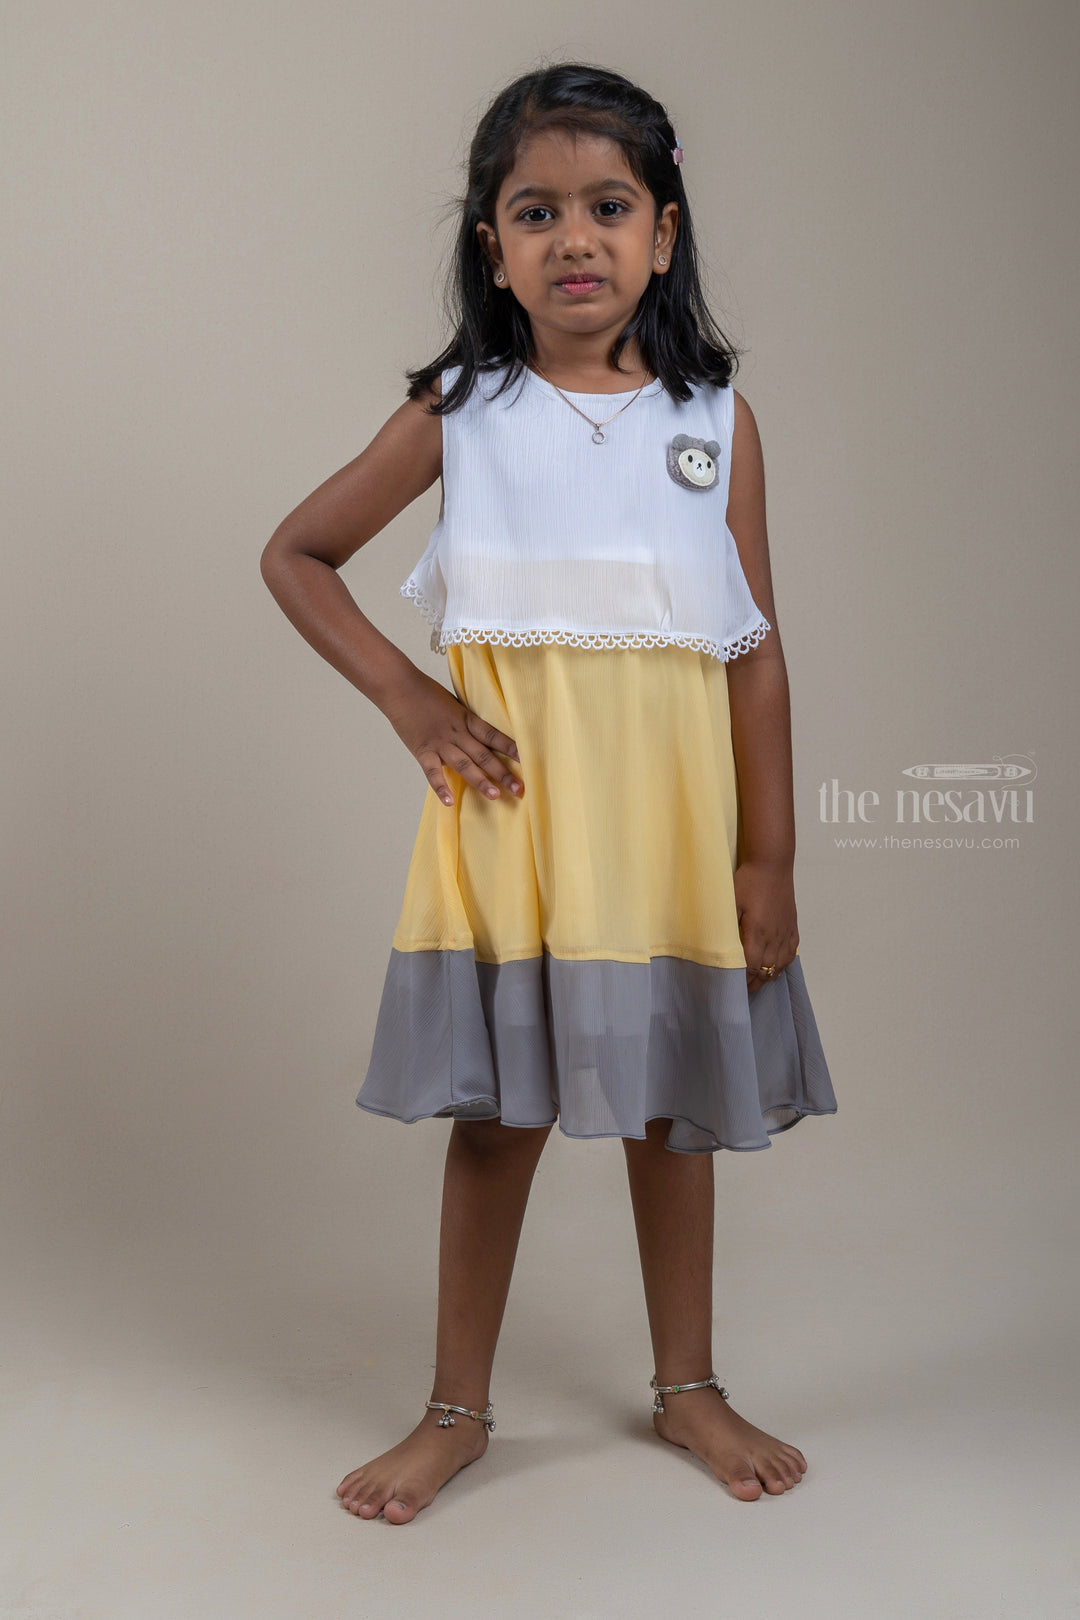 The Nesavu Frocks & Dresses Adorable White N Yellow Sleeveless Chiffon Frock For Girls psr silks Nesavu 20 (3Y) / Yellow GFC1042B